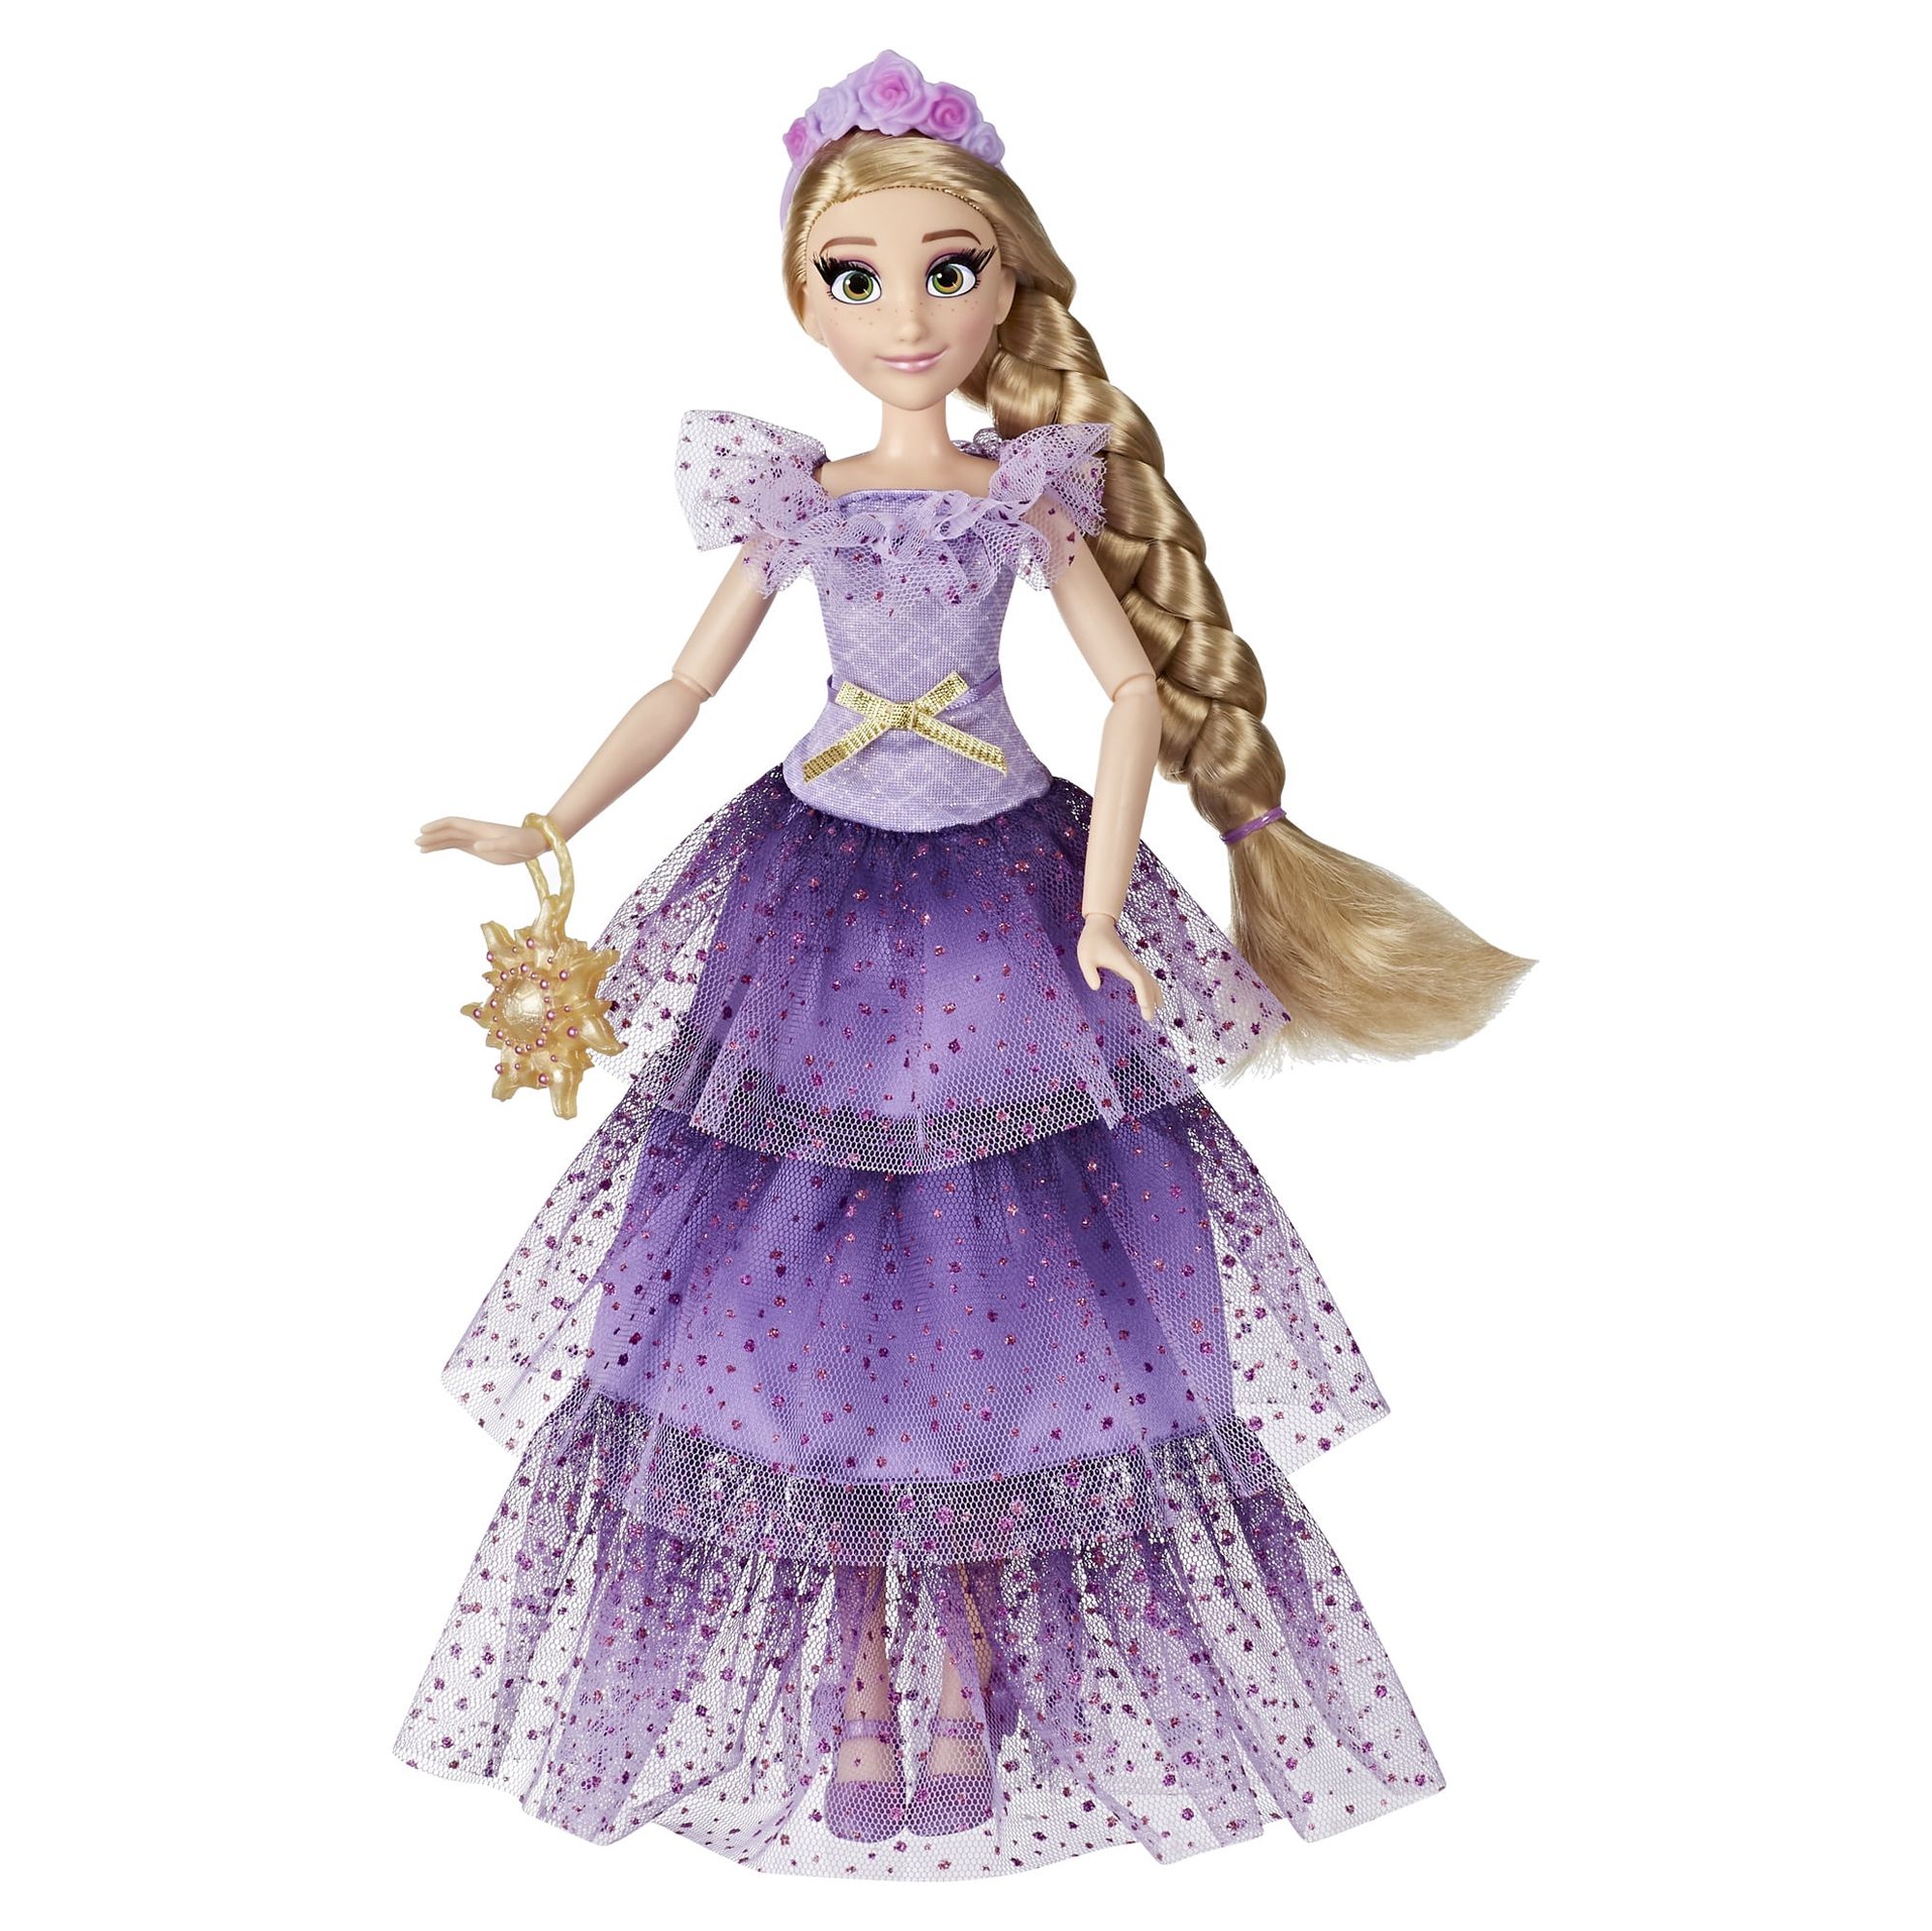 Disney Princess Style Series Rapunzel Doll W Ith Headband, Purse, Shoes - image 1 of 15